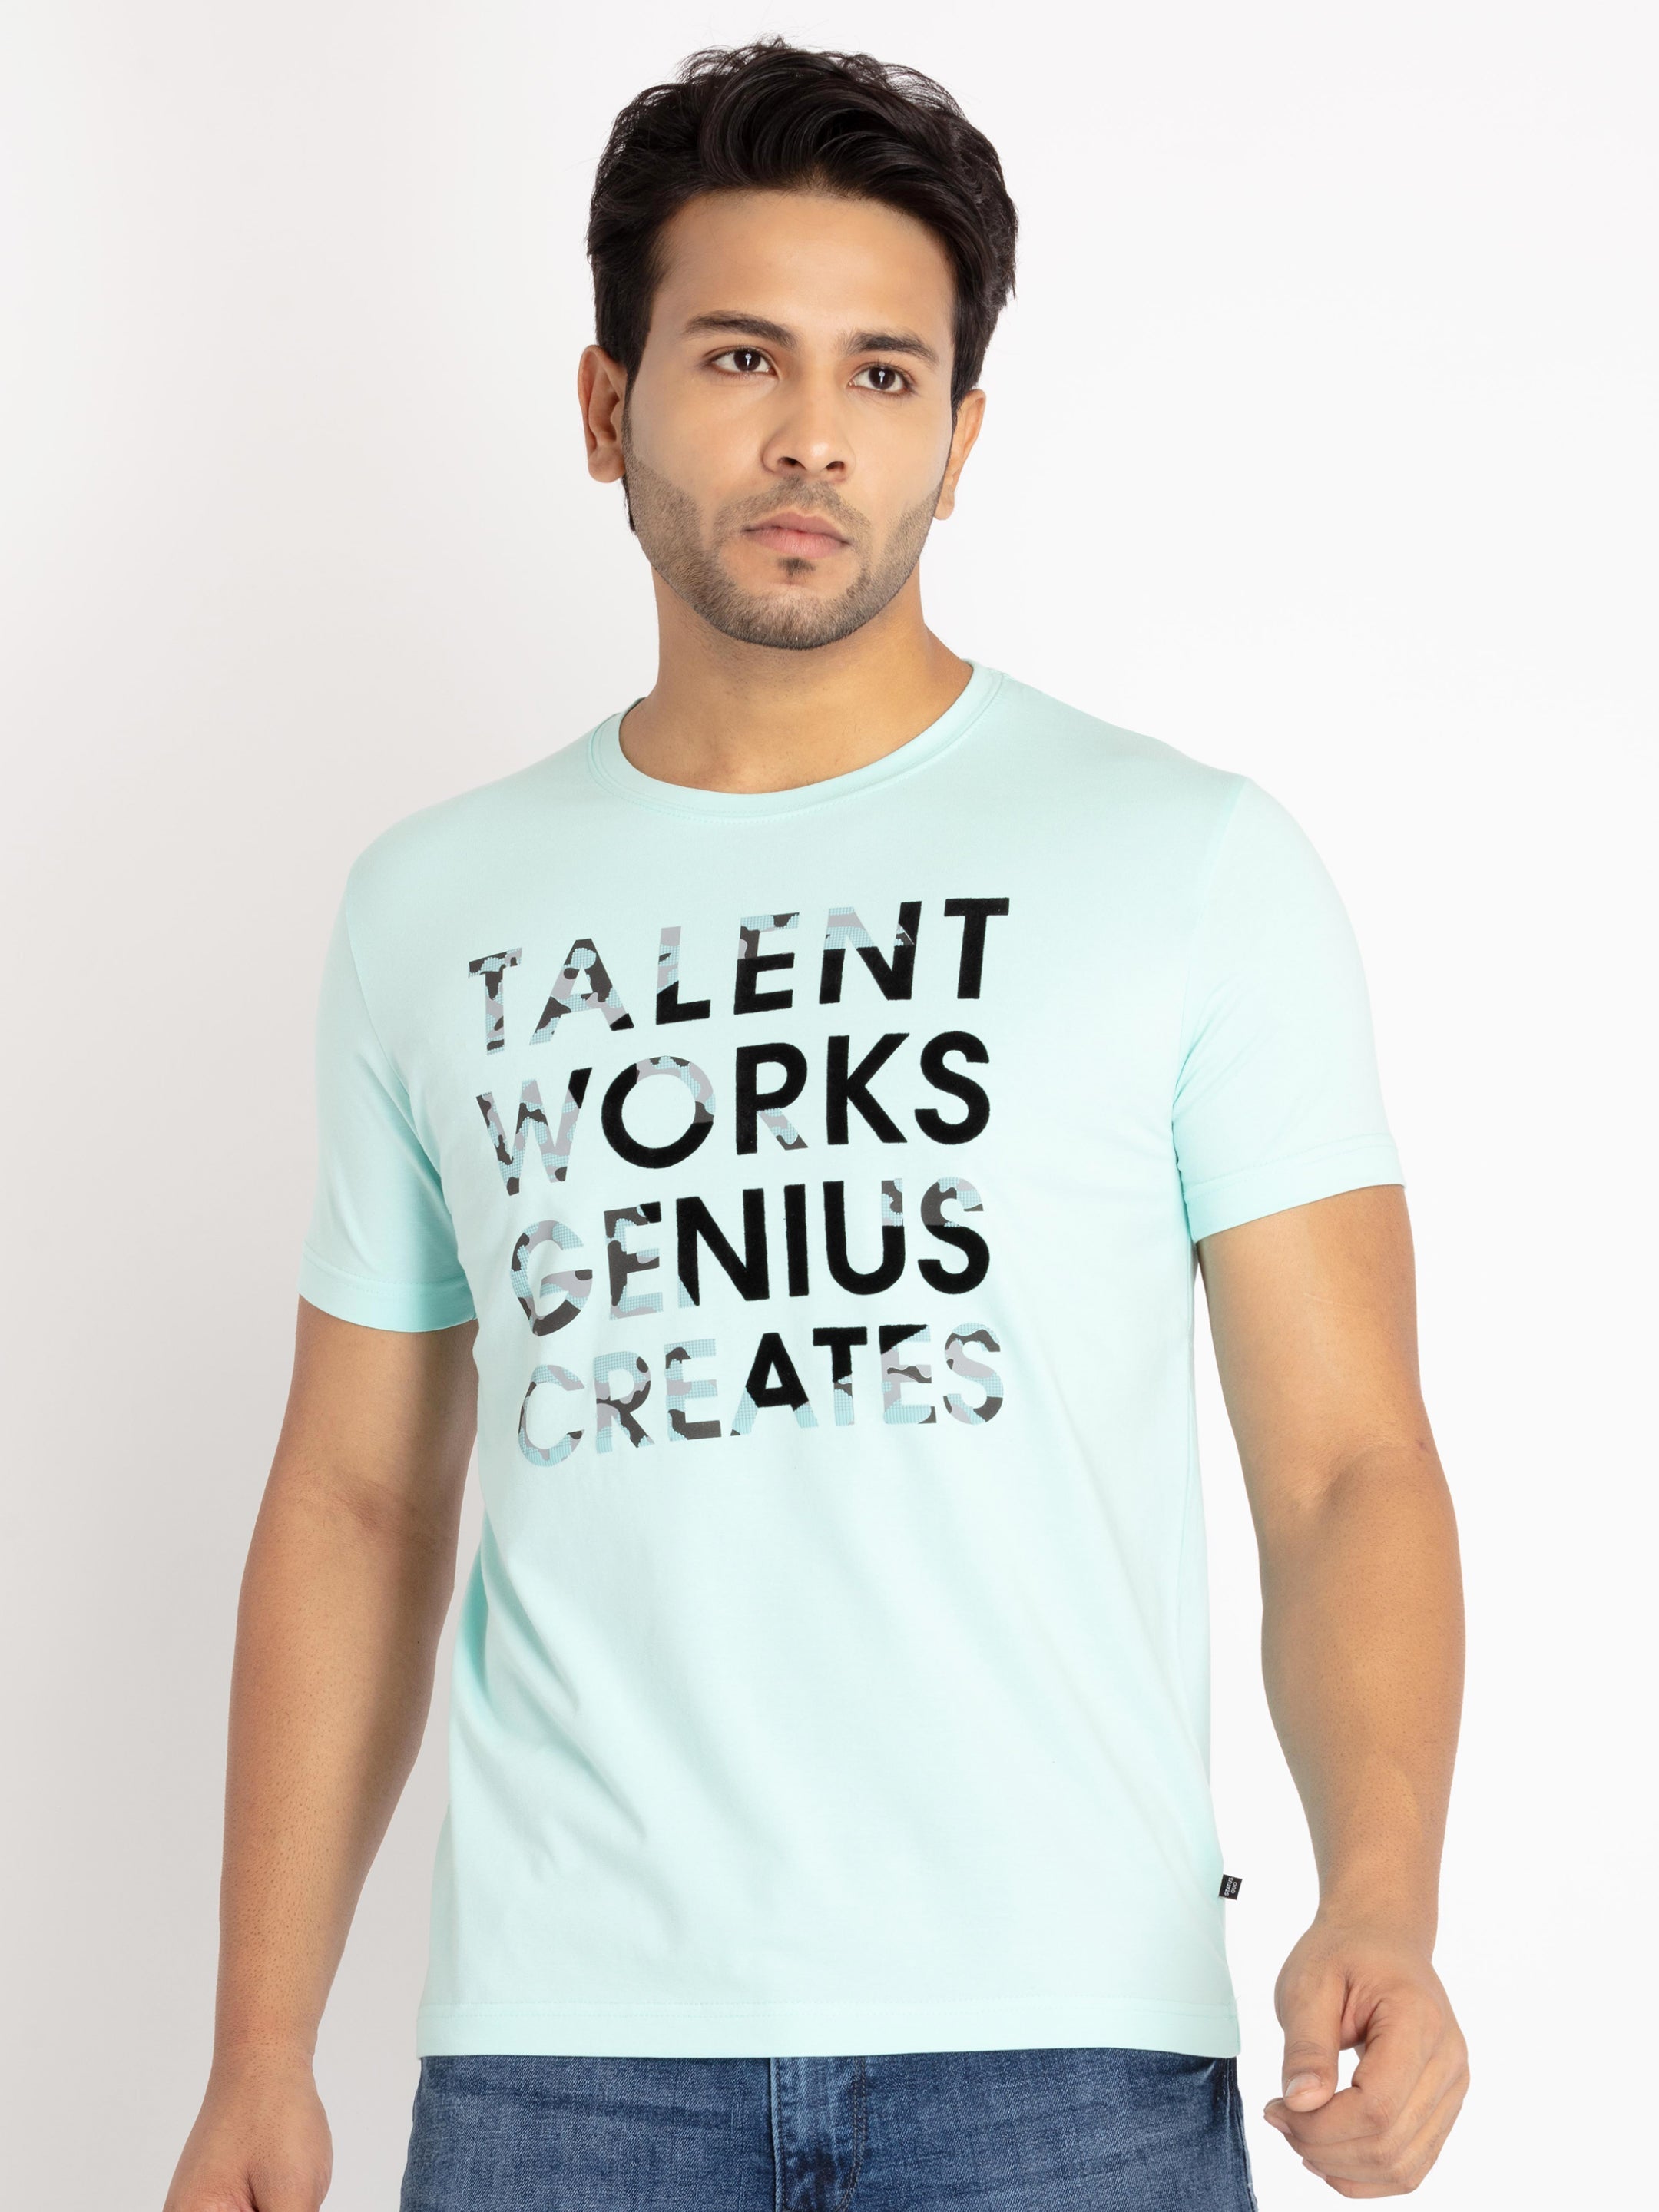 Status Quo |Men's Solid T-shirt - S, M, L, XL, XXL